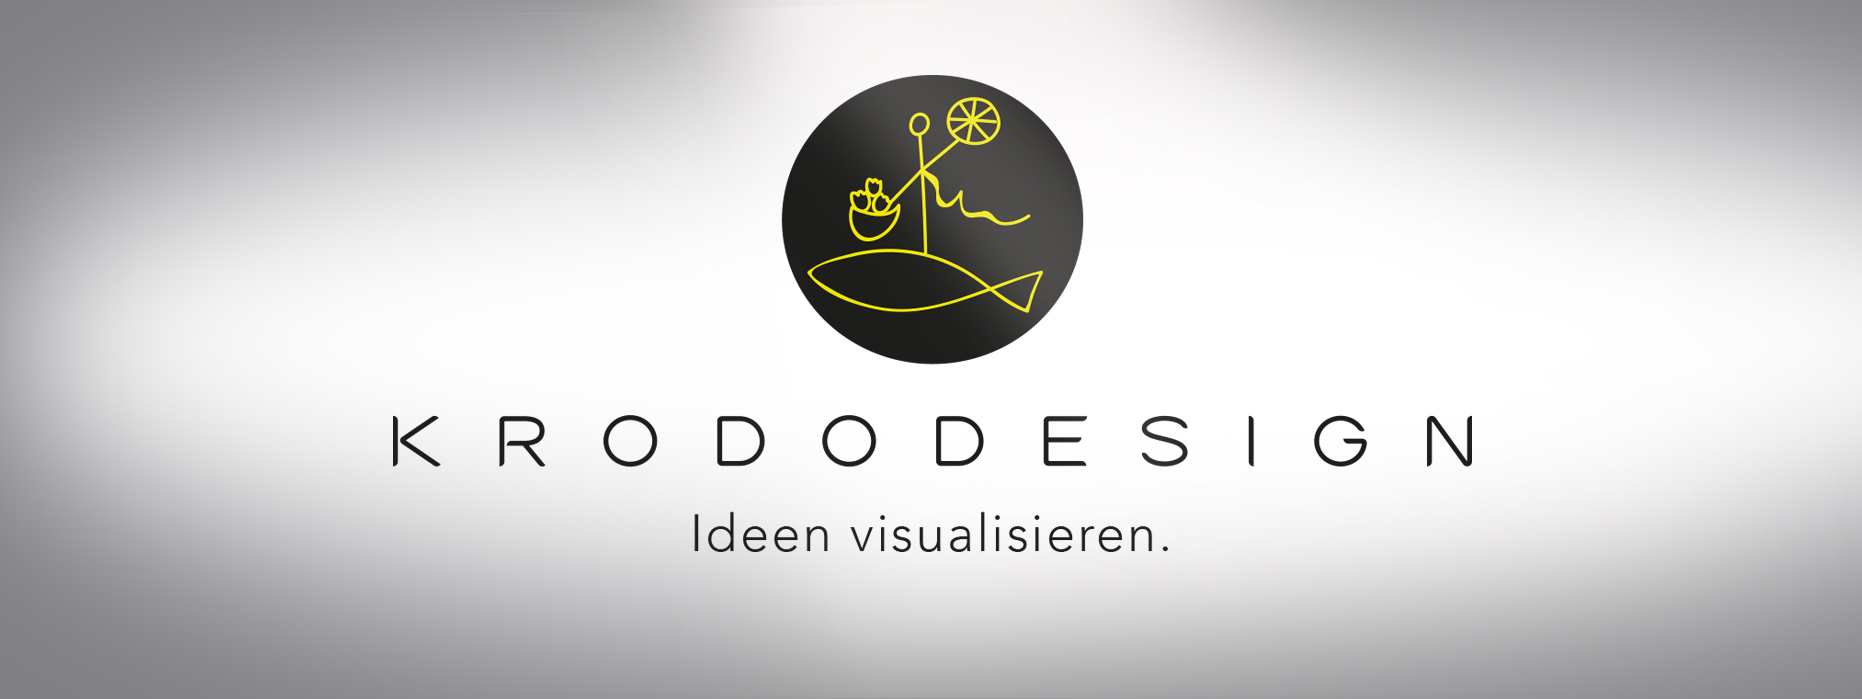 Krododesign - Ideen visualisieren, Abler & Jürgens GbR